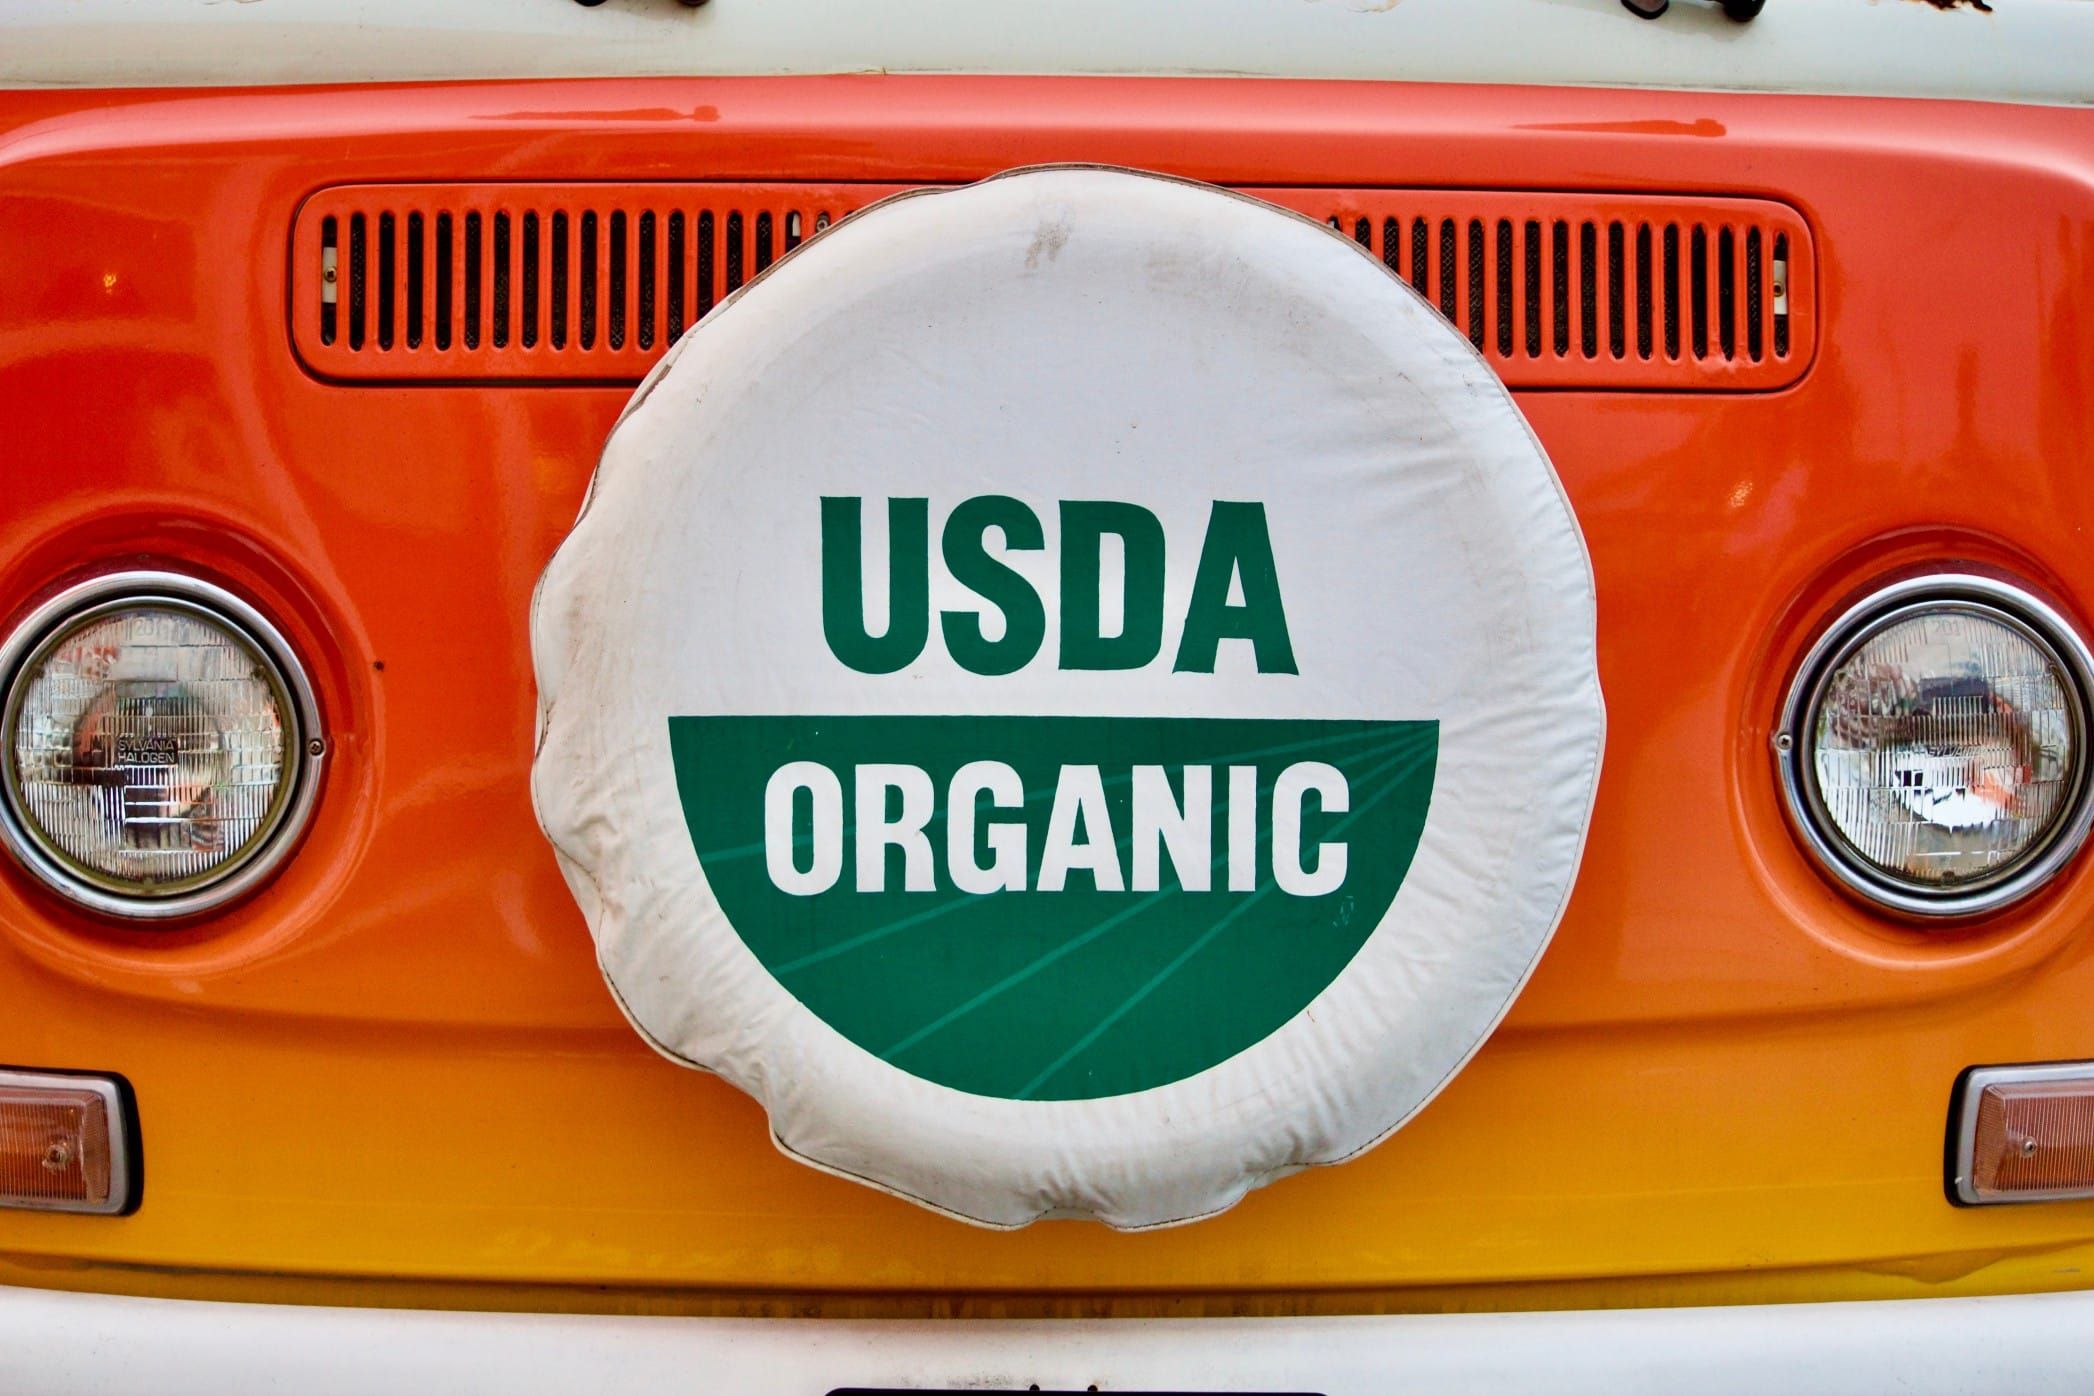 USDA Organic Label